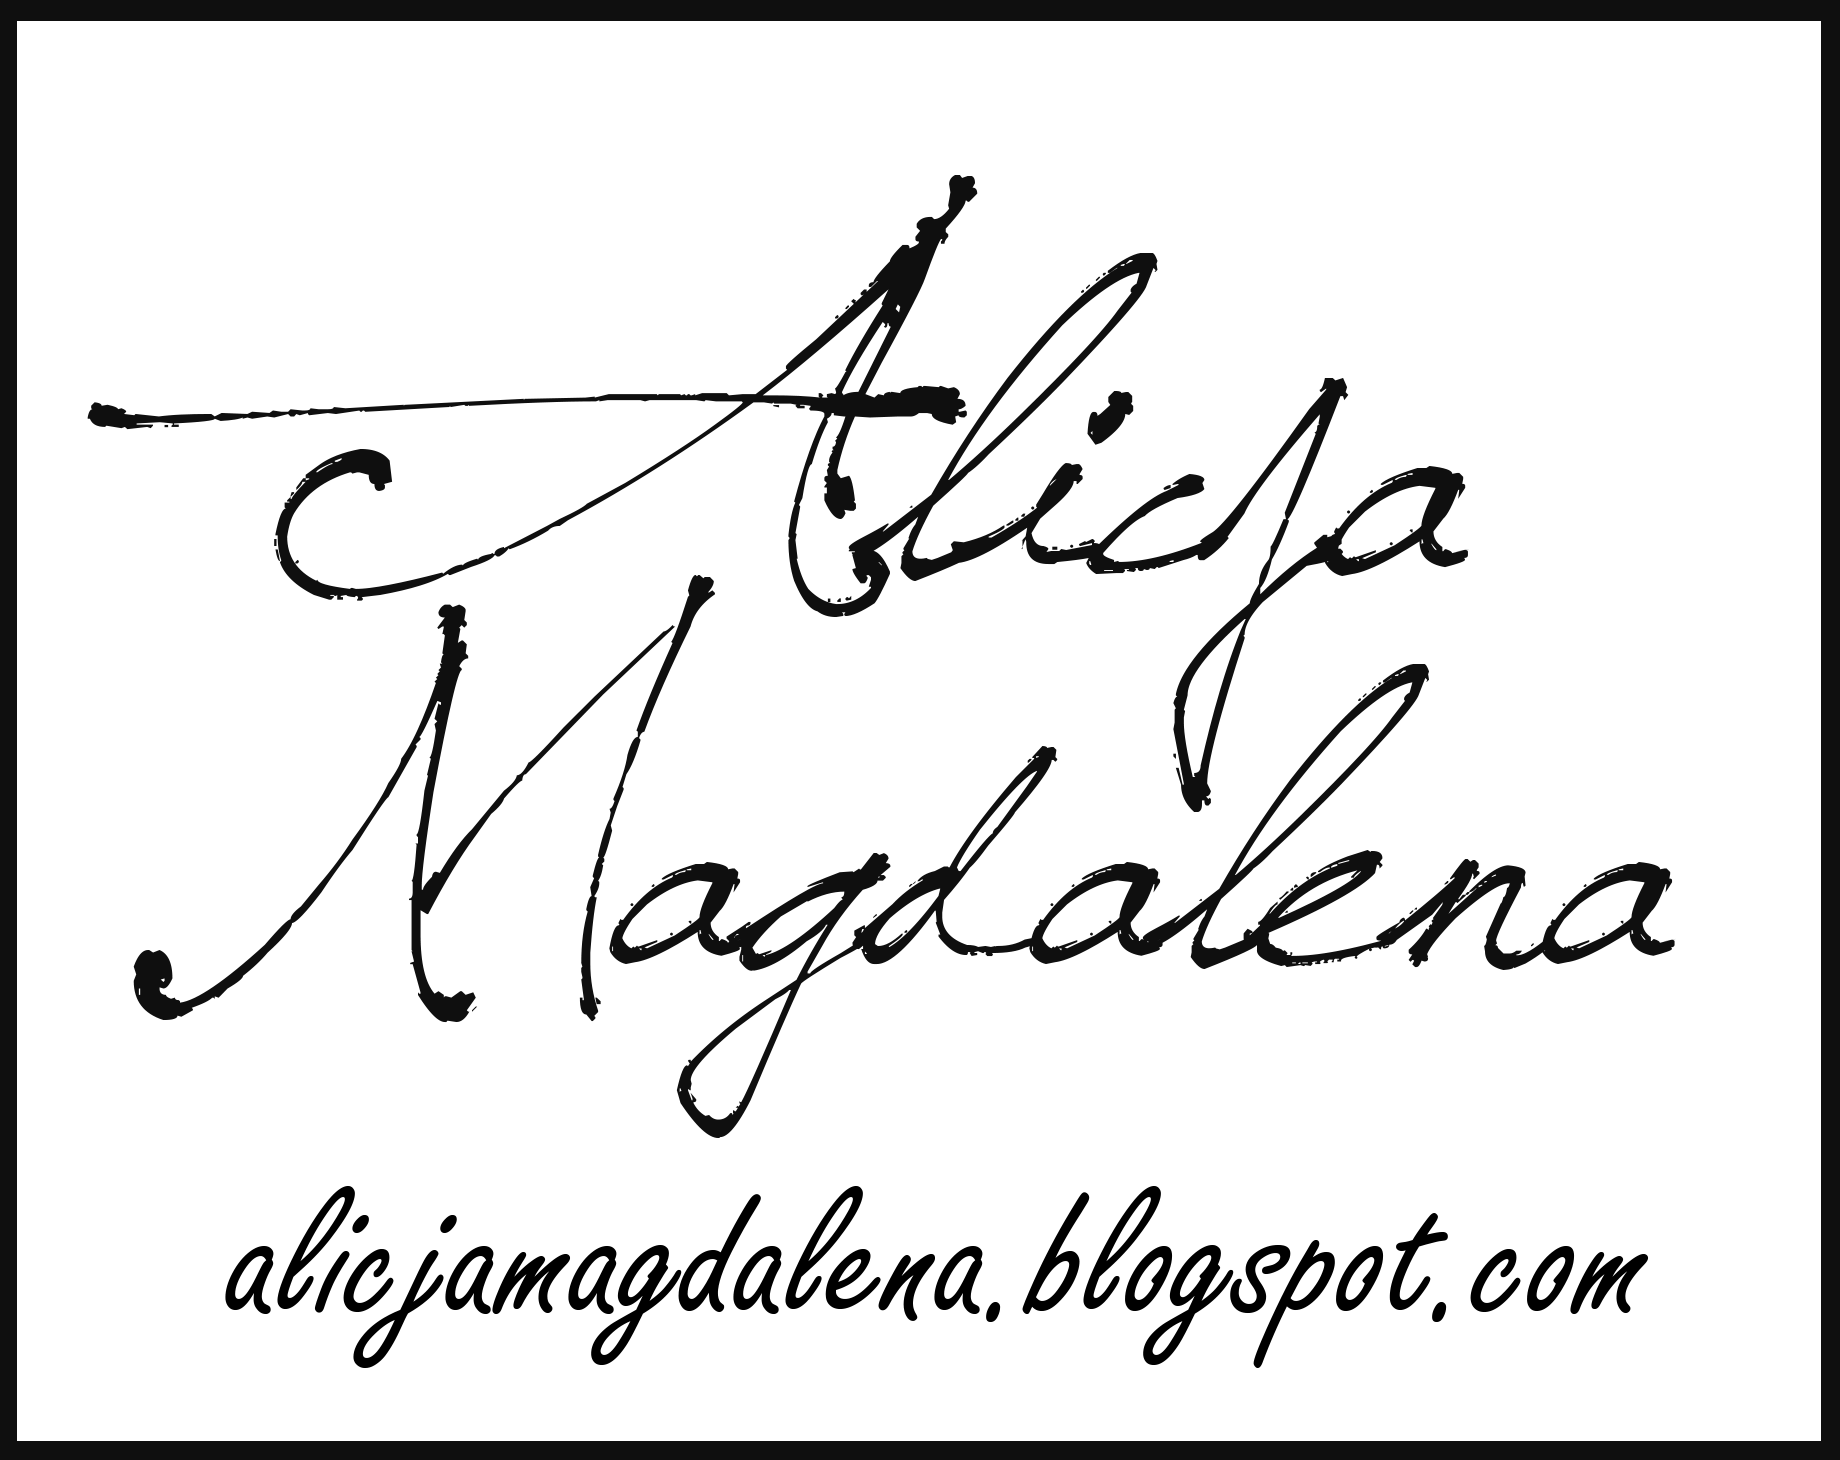 Grafika ze stylizowanym napisem: Alicja Magdalena alicjamagdalena.blogspot.pl